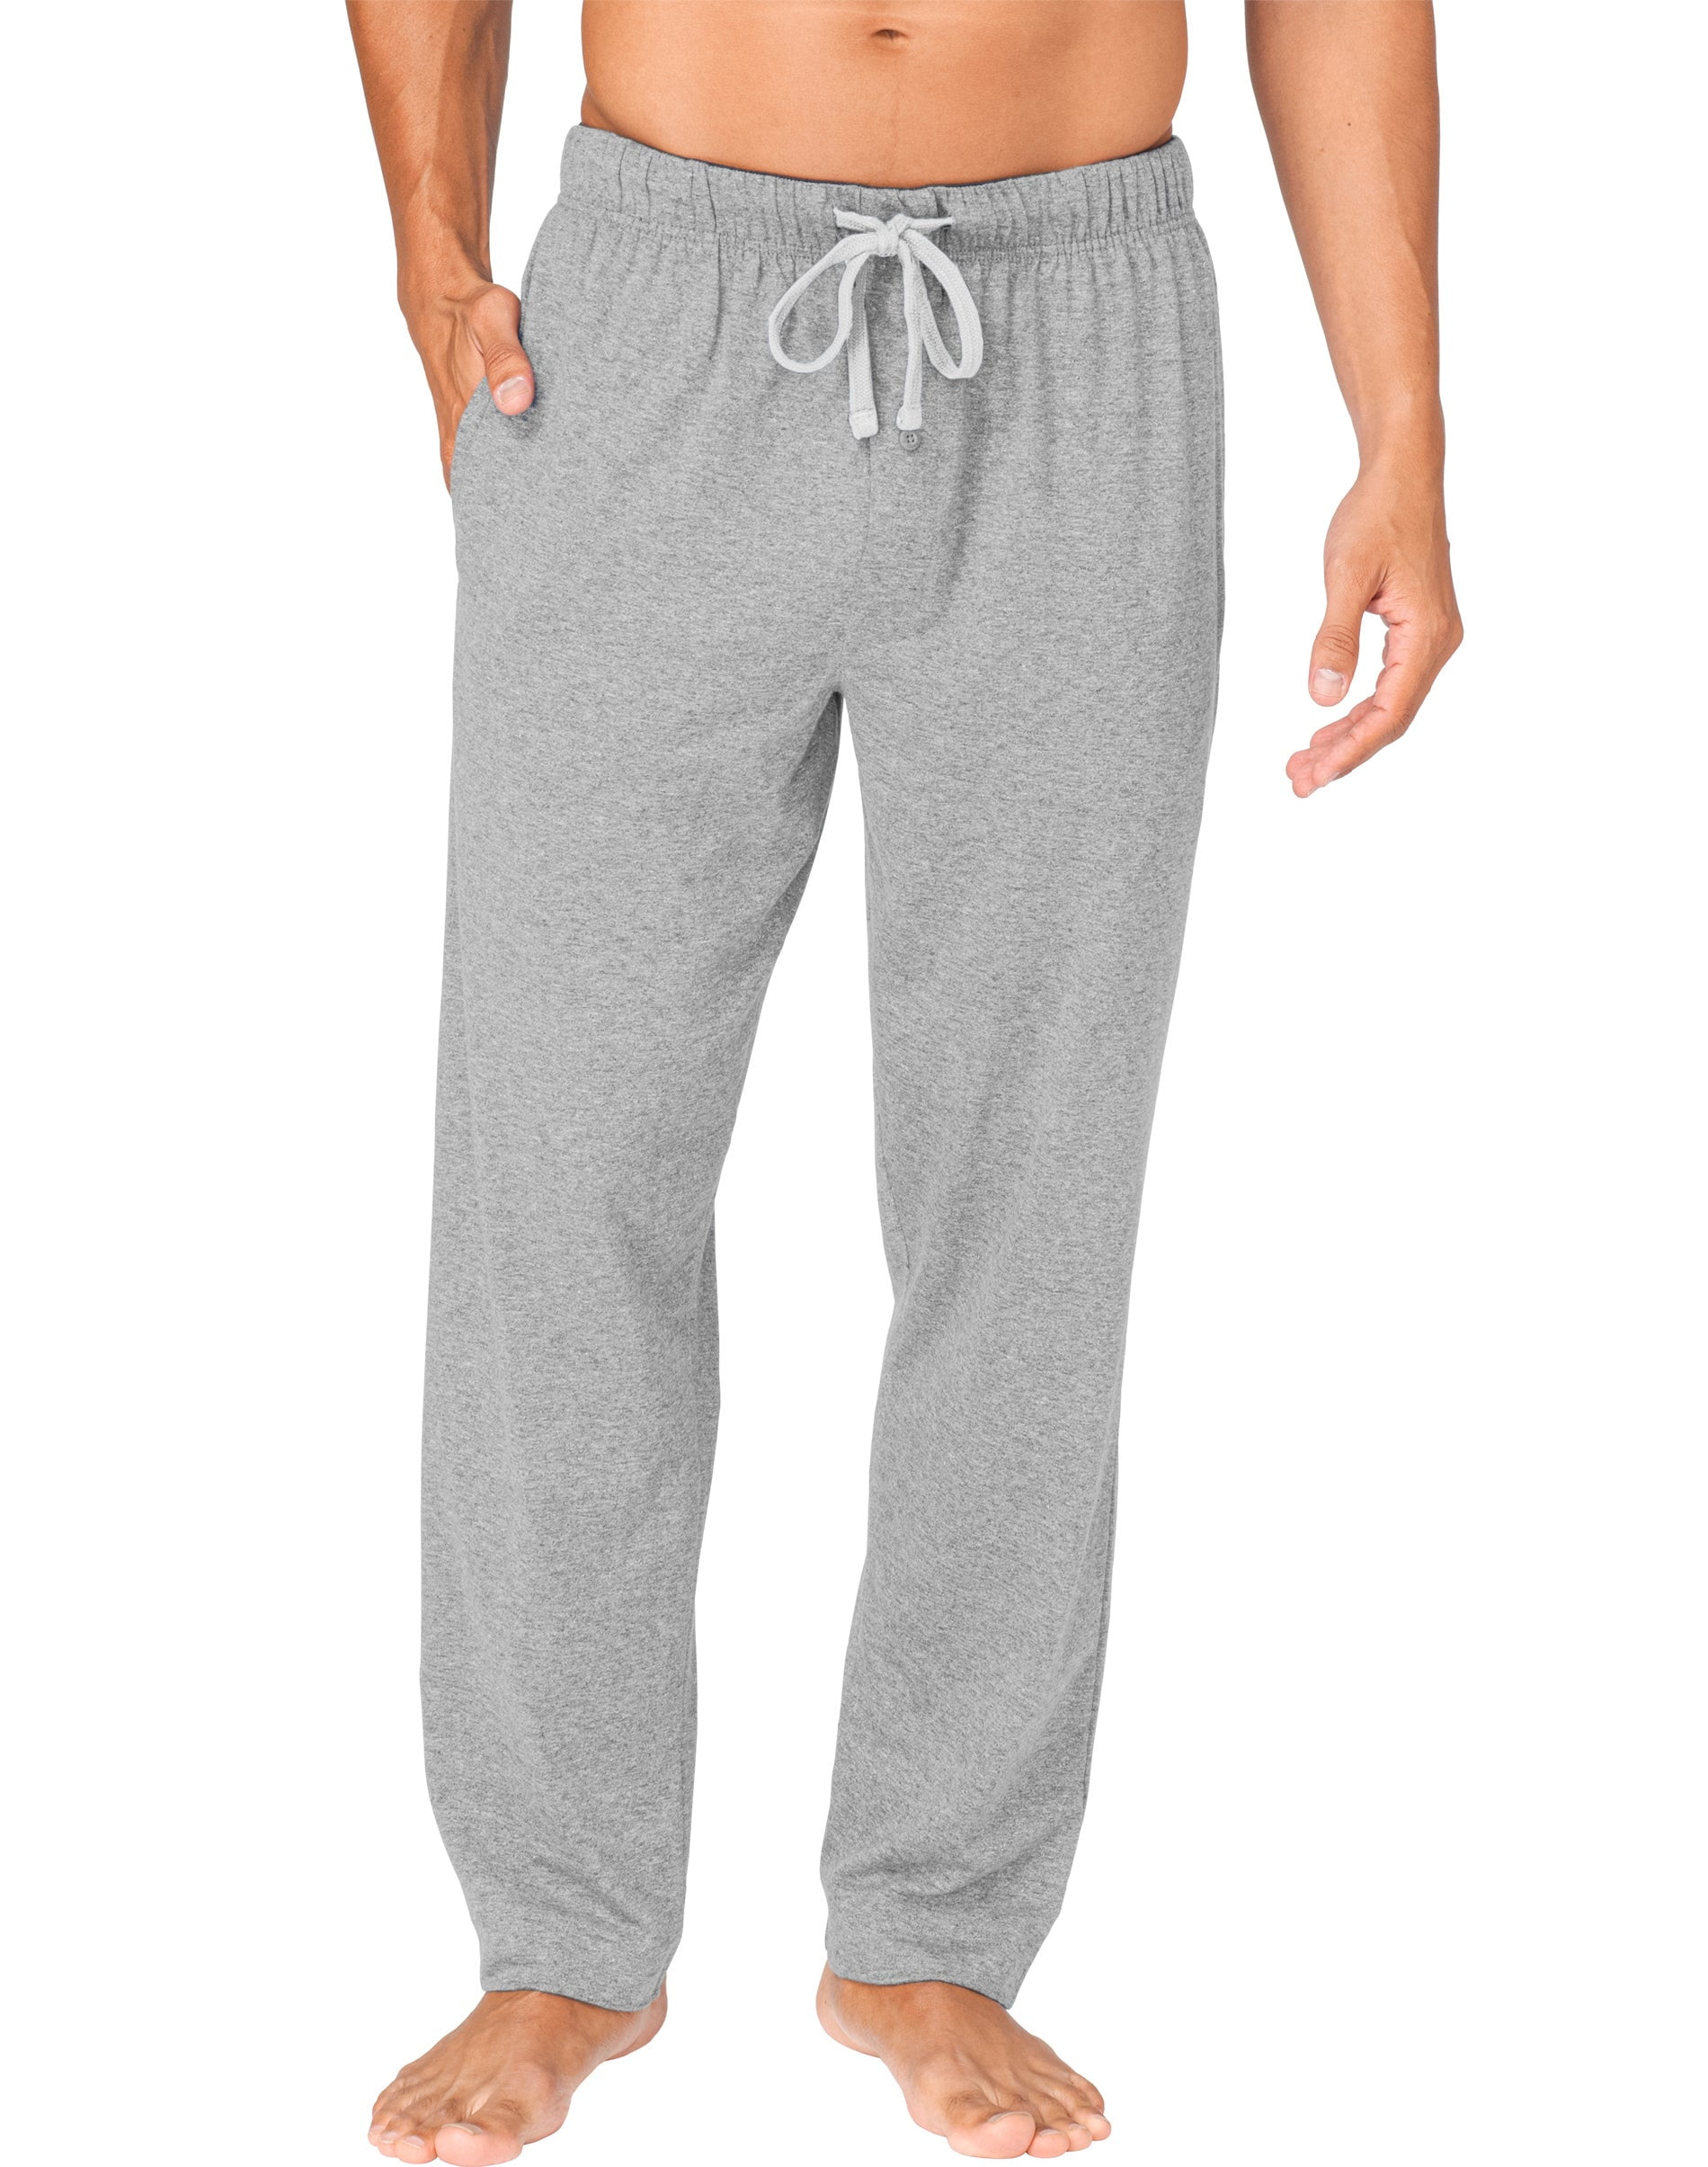 Hanes Men's X-Temp Solid Knit Pajama Pants Grindle Charcoal 